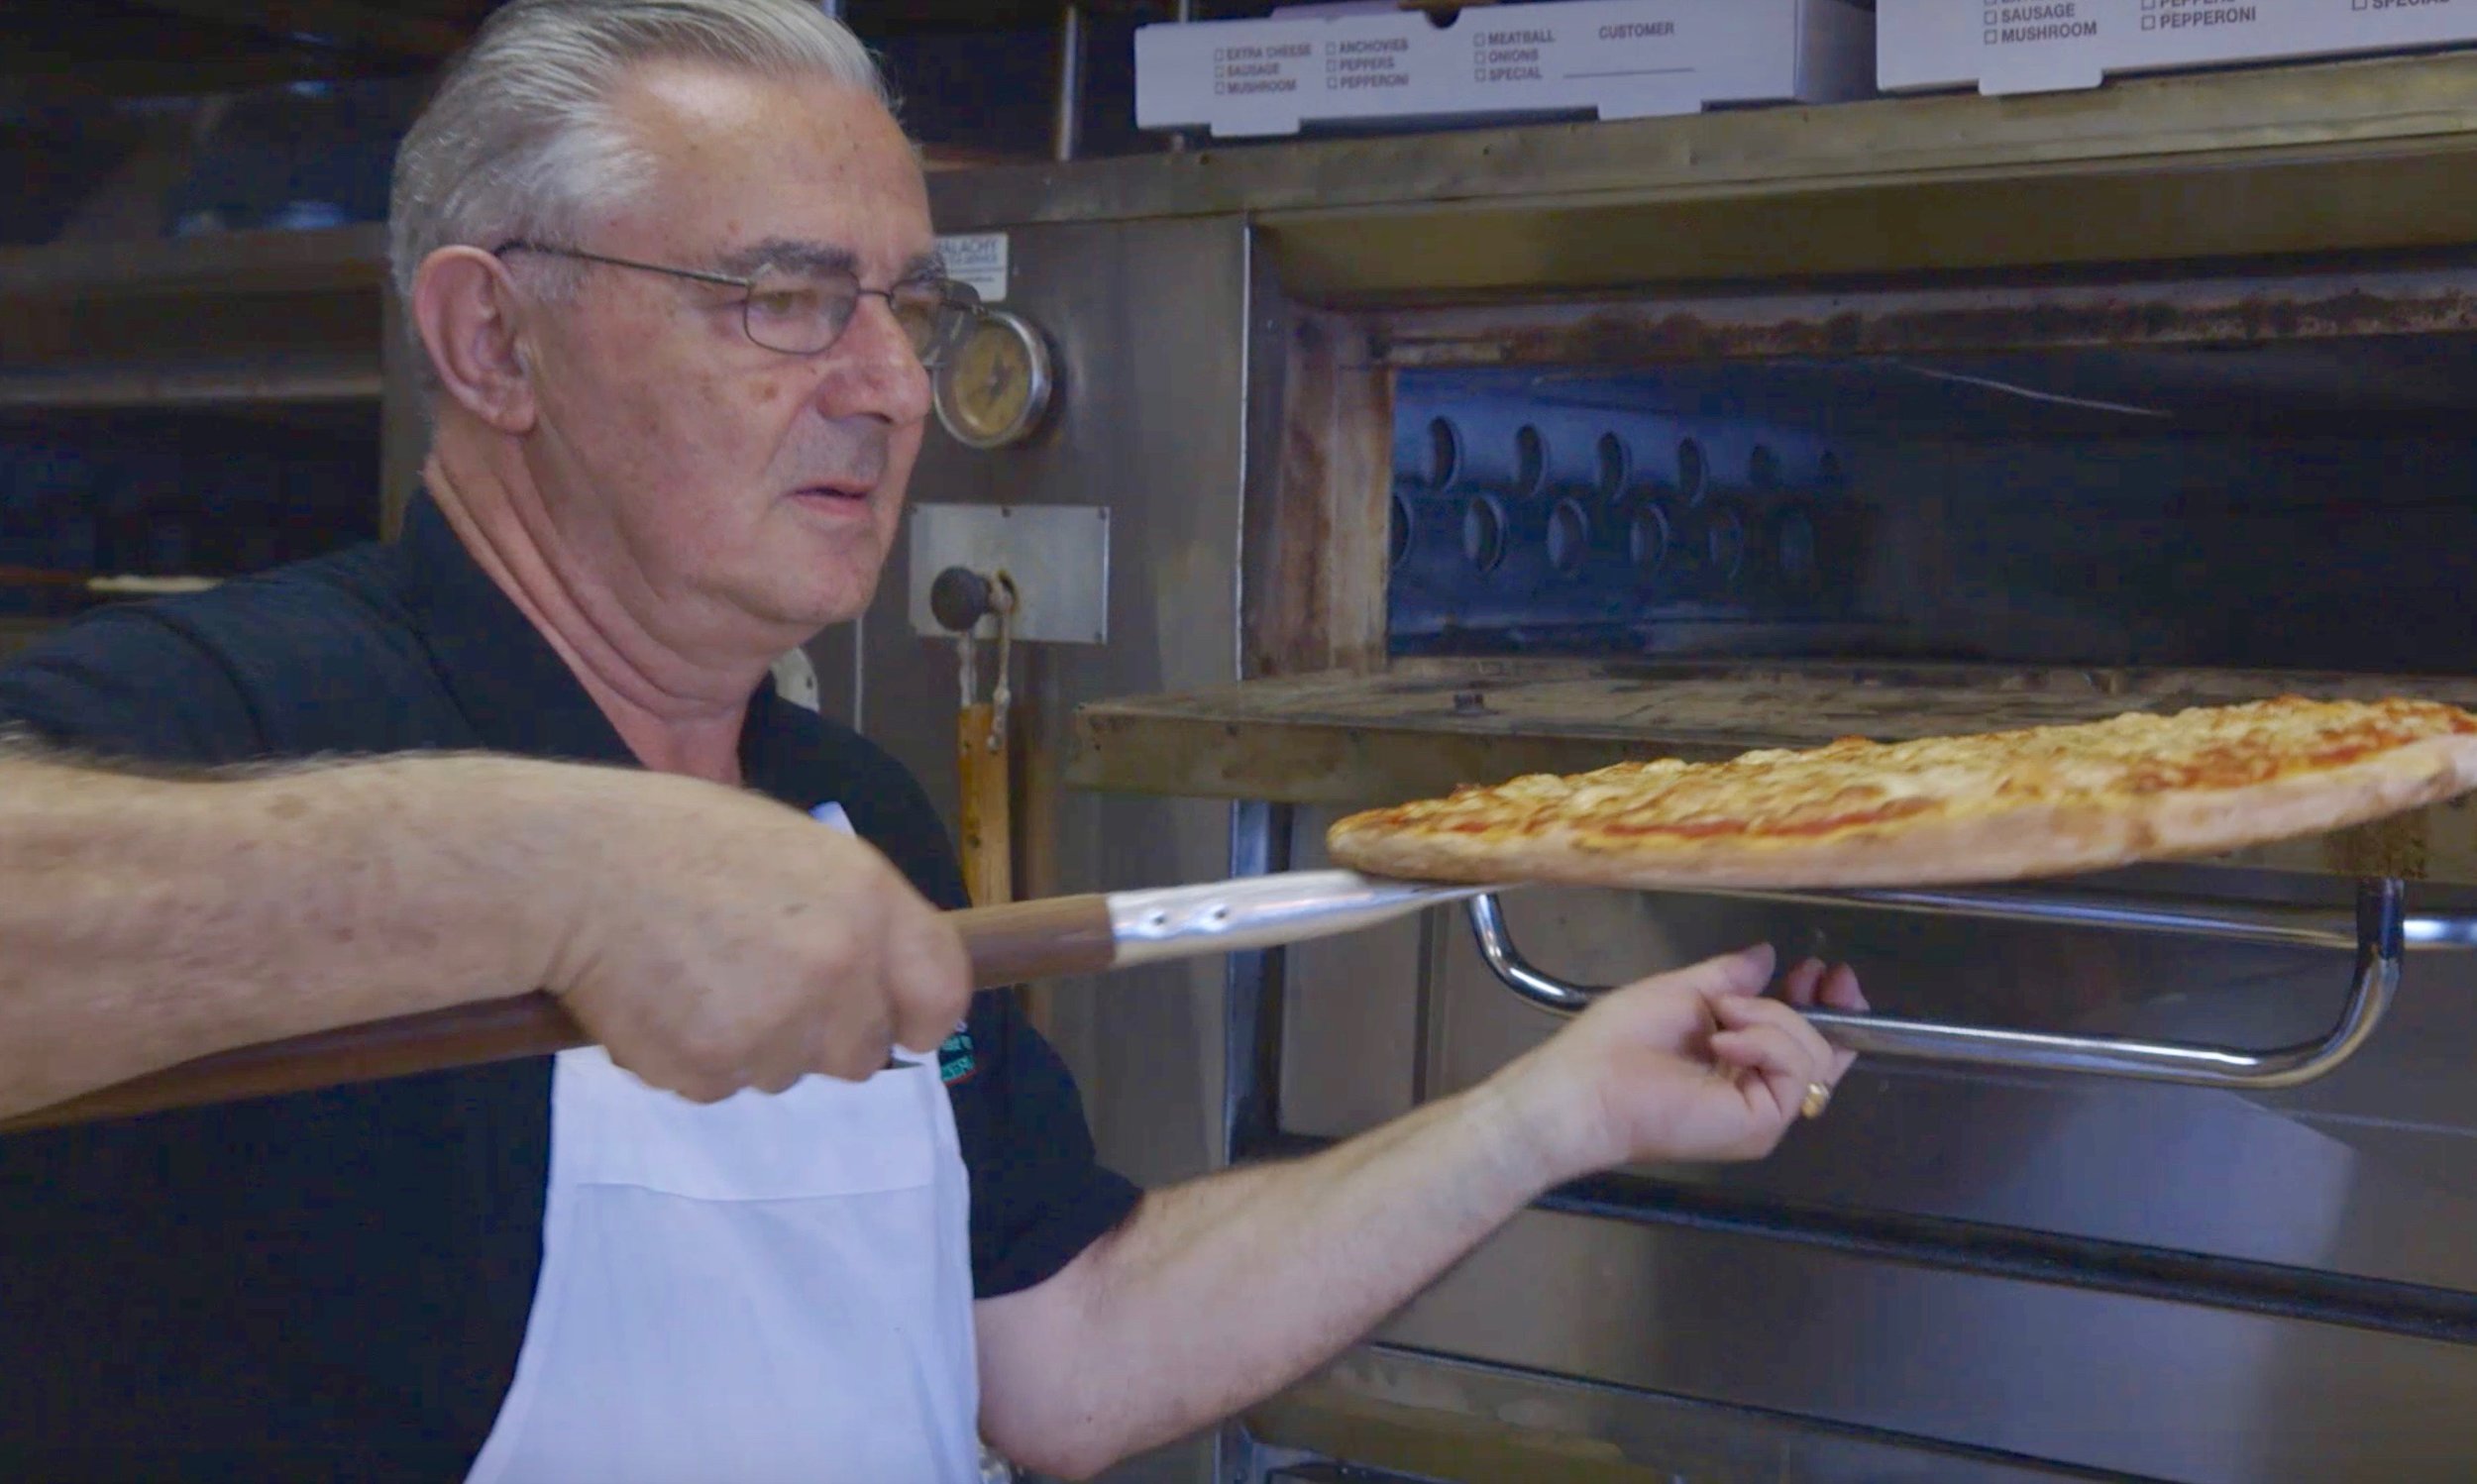 PIZZA SHOP: AN ITALIAN-AMERICAN DREAM